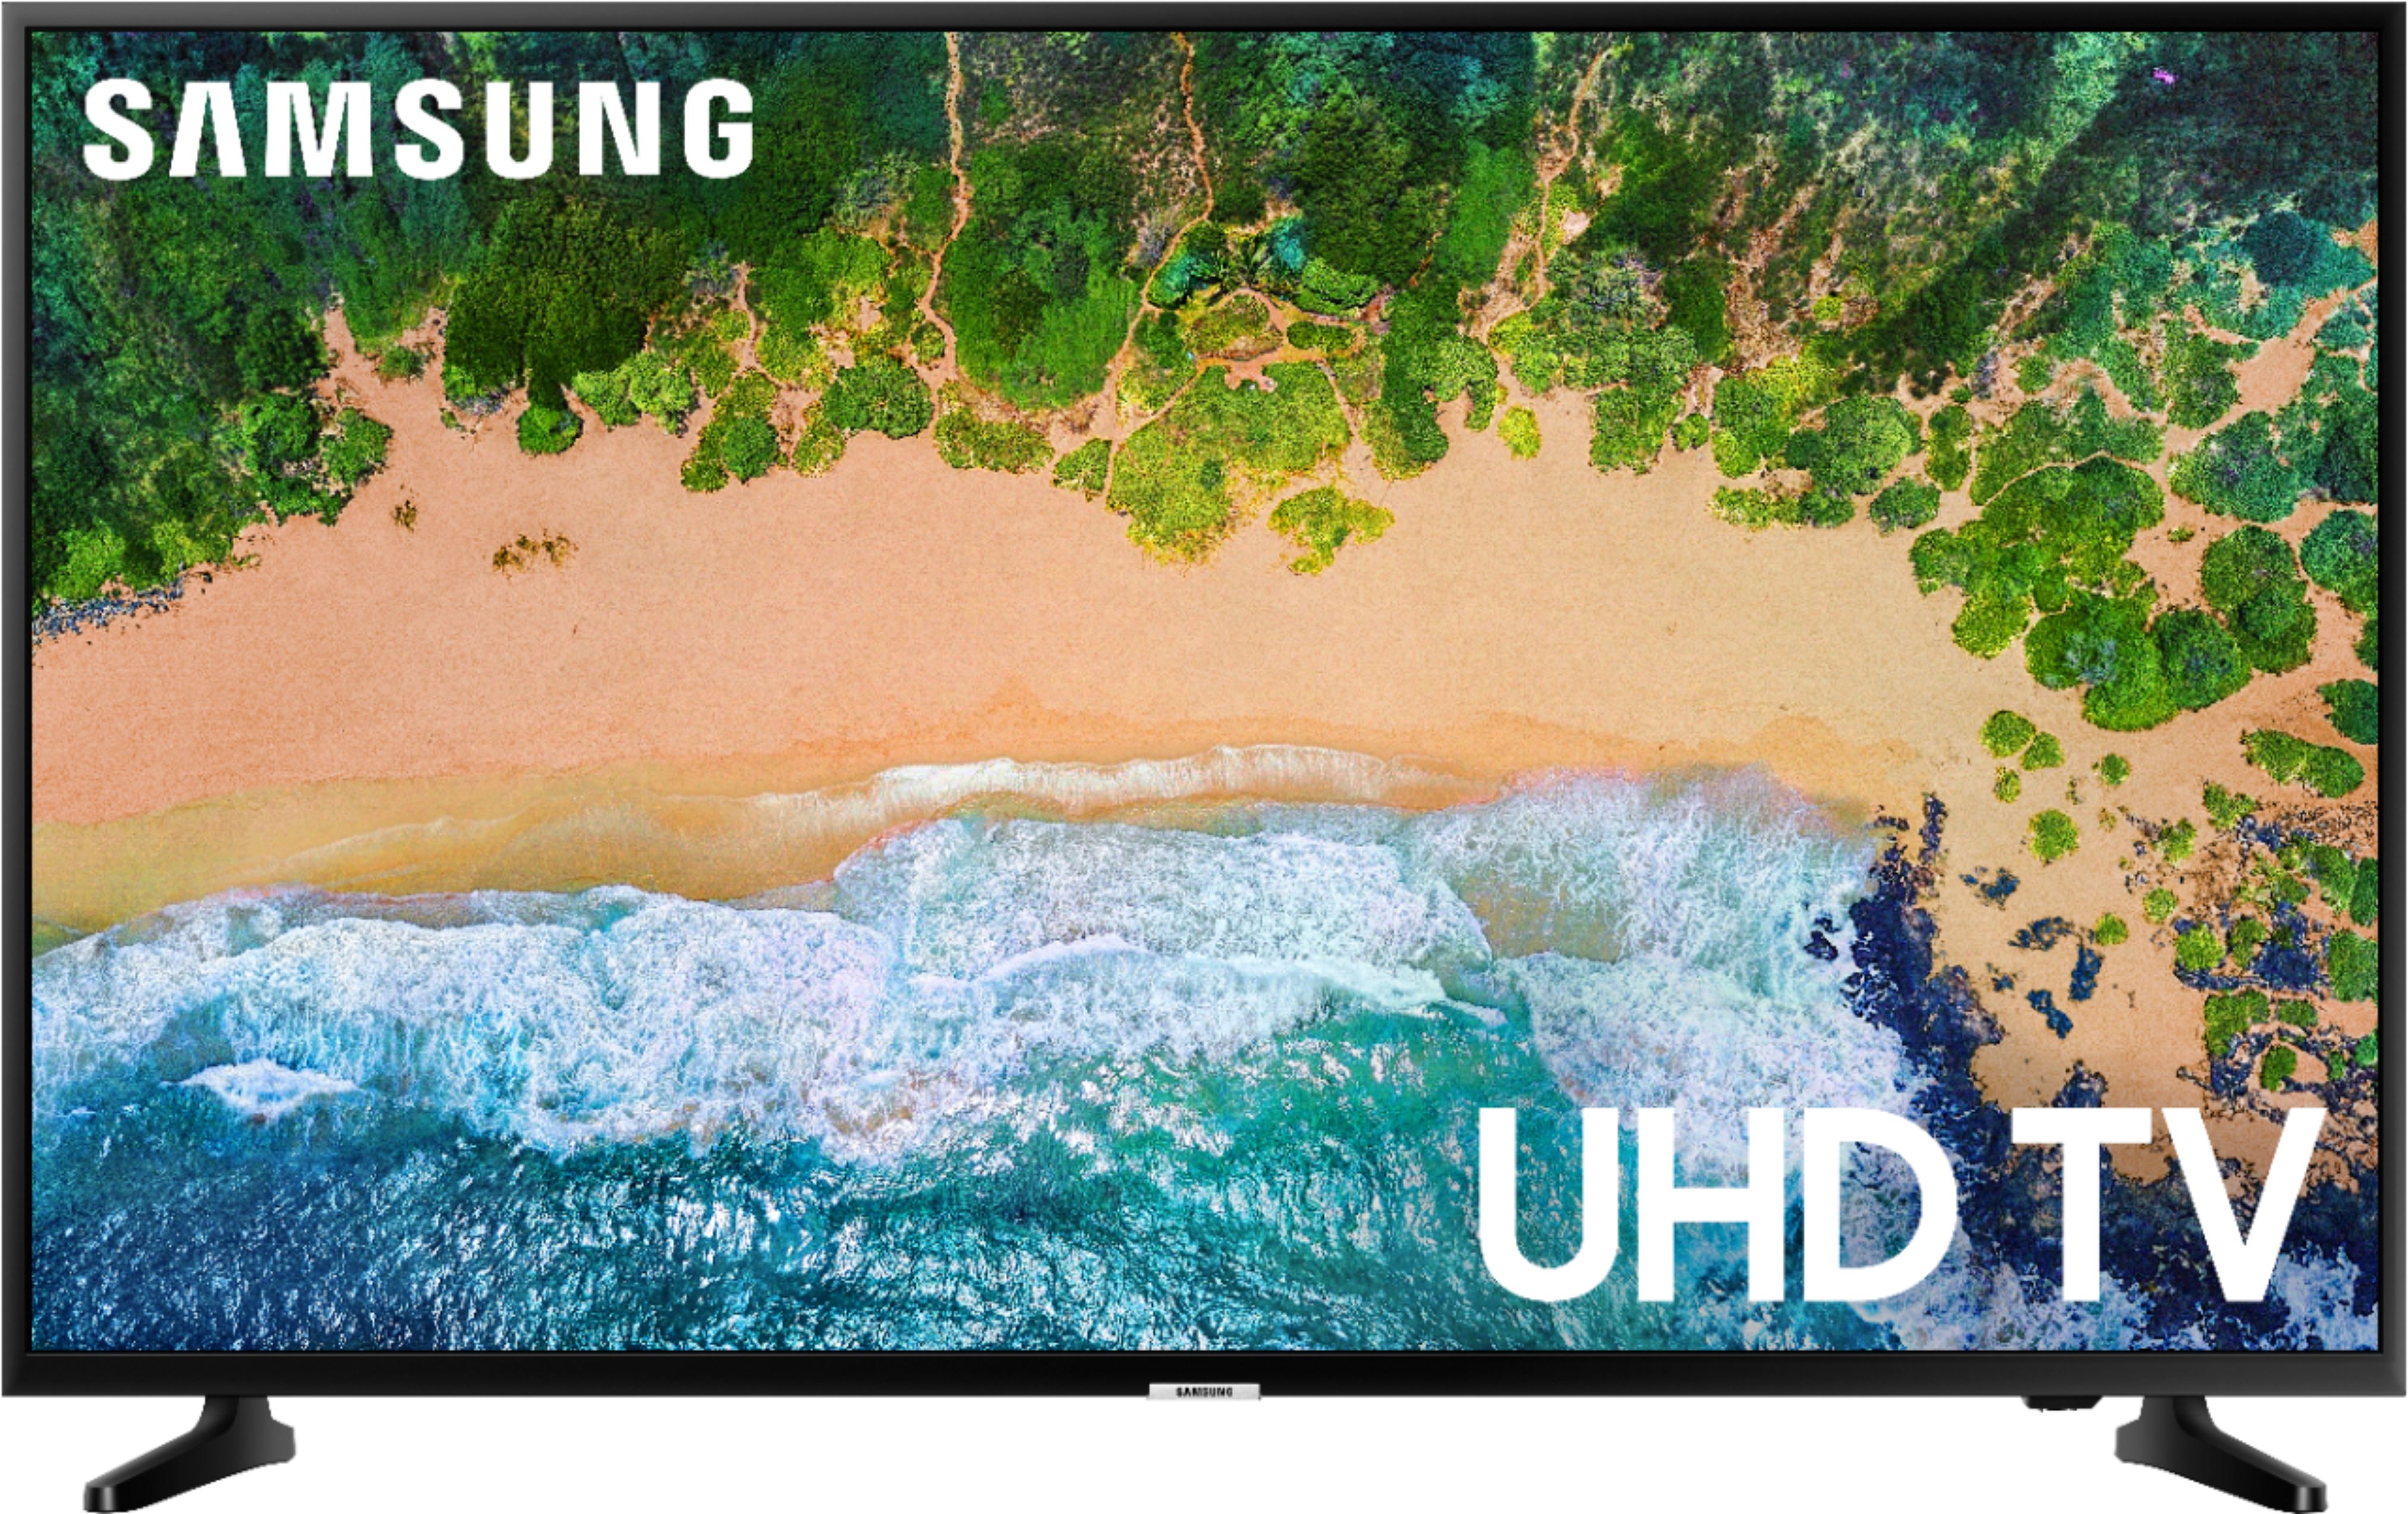 Customer Reviews: Samsung 40" LED 6 Series 2160p 4K UHD TV with HDR UN40NU6070FXZA - Buy